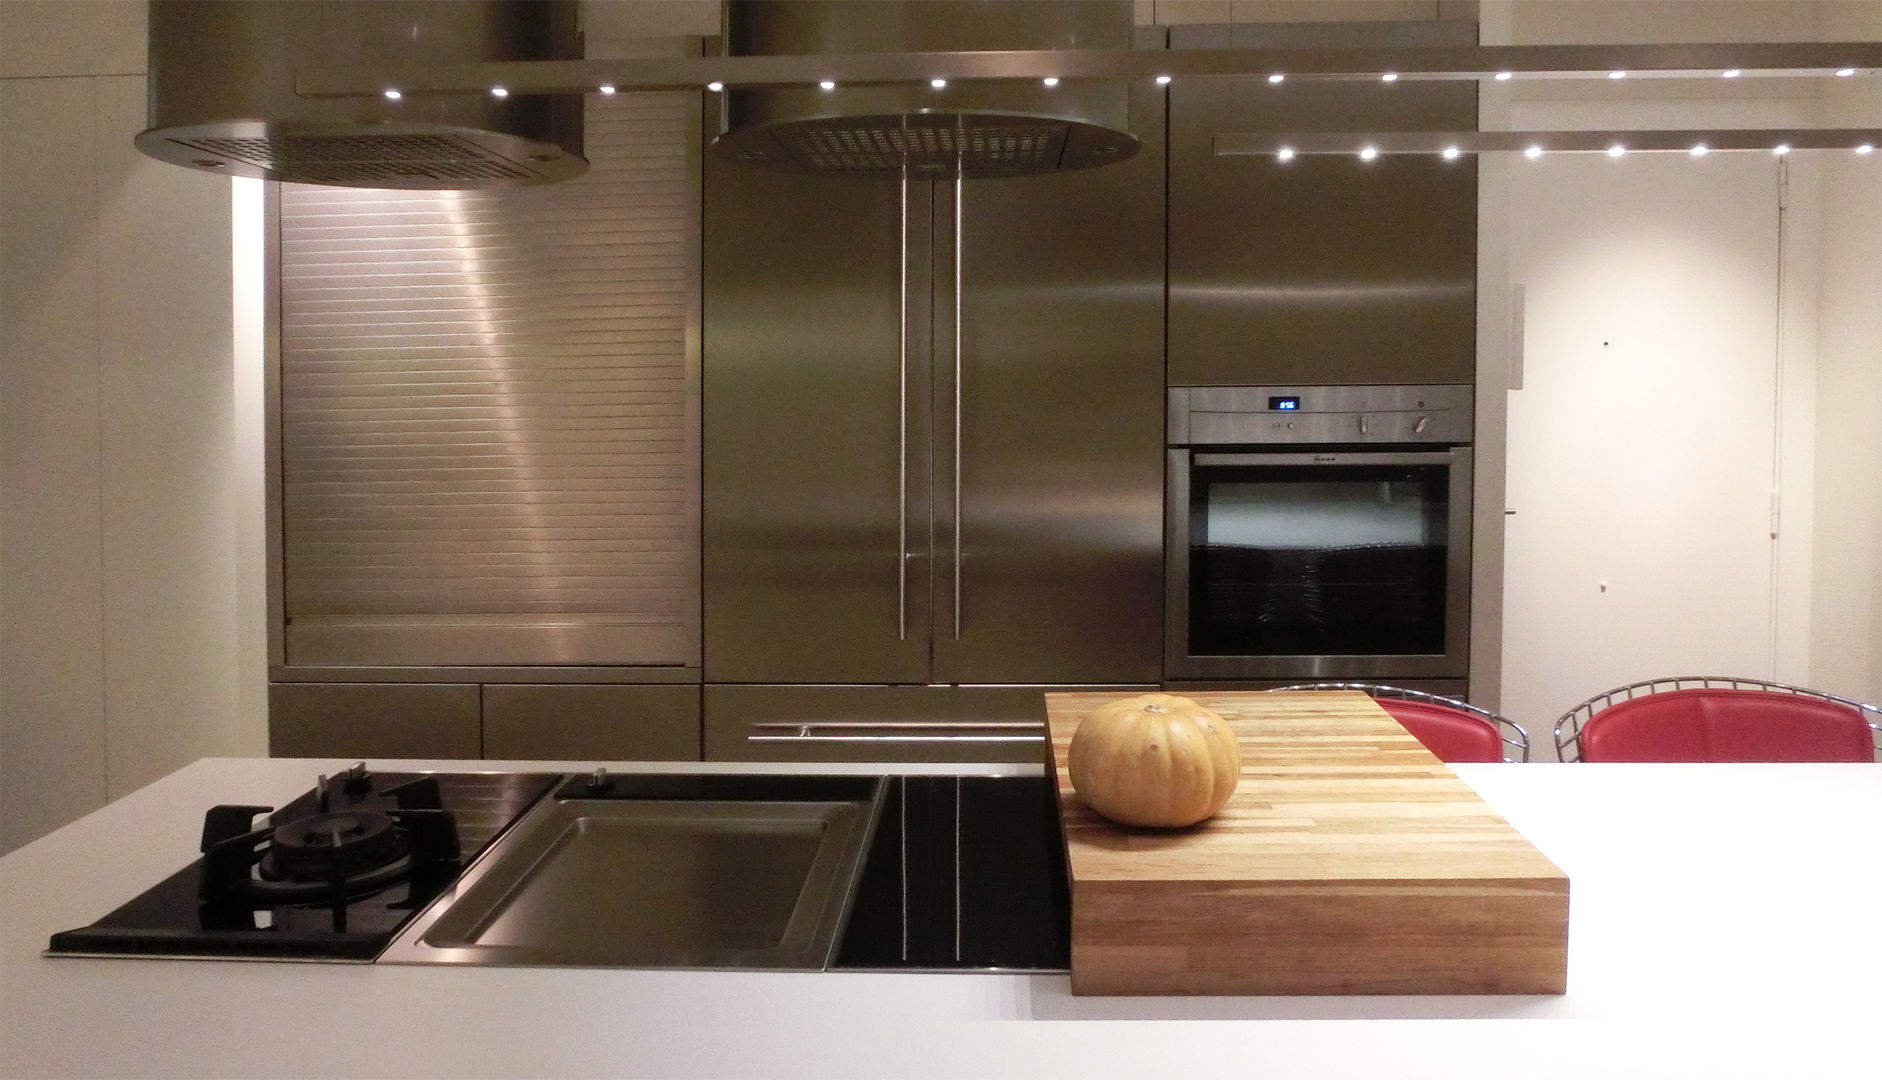 Detail of triple cooking unit. Daifuku Designs Cozinhas minimalistas kitchen cabinet,kitchen island